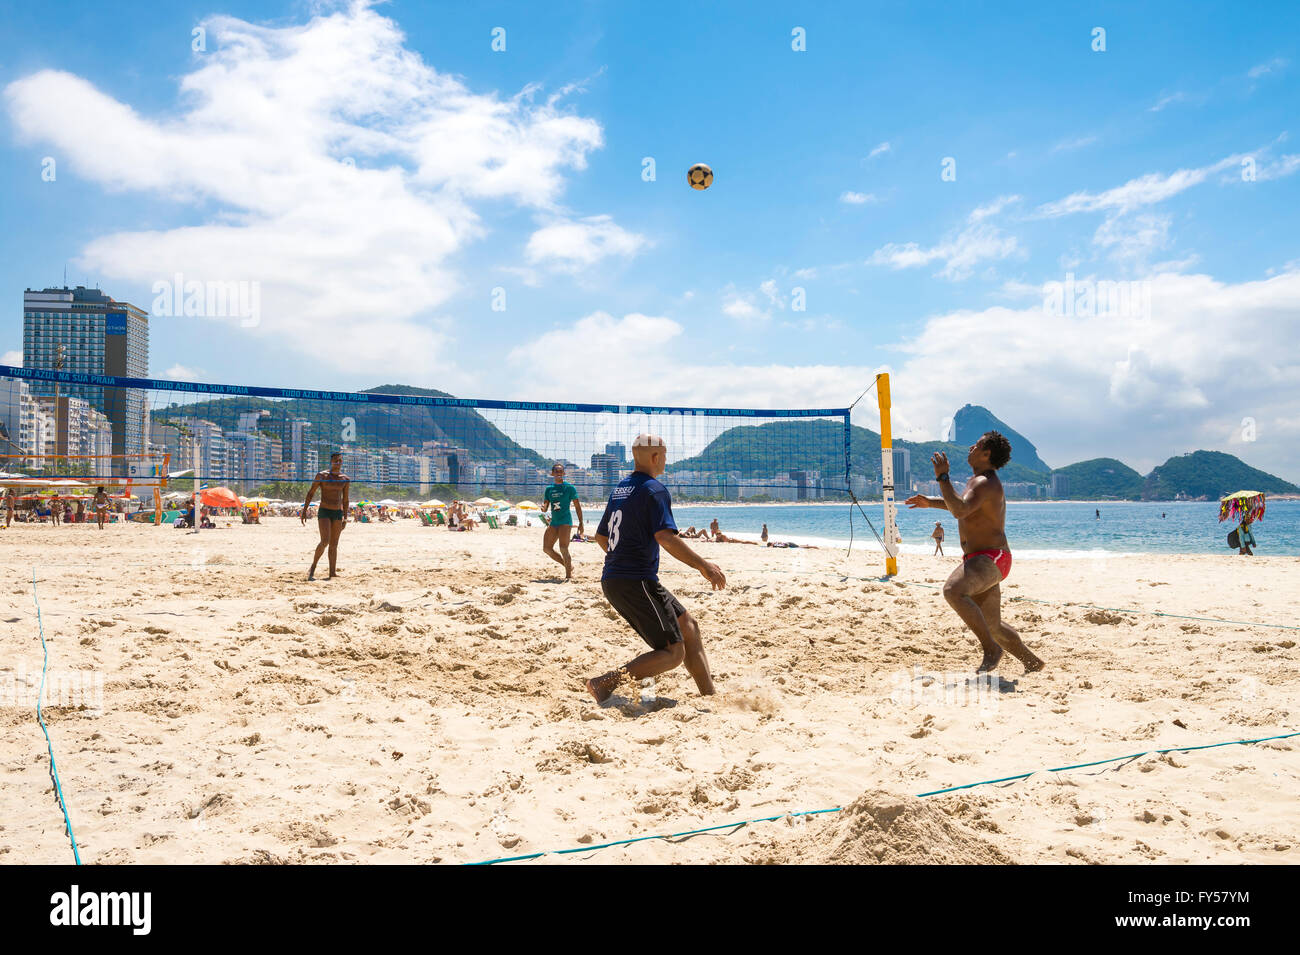 RIO DE JANEIRO - MARCH 15, 2016: Brazilian men play a game of futevolei (footvolley, a sport combining football and volleyball. Stock Photo